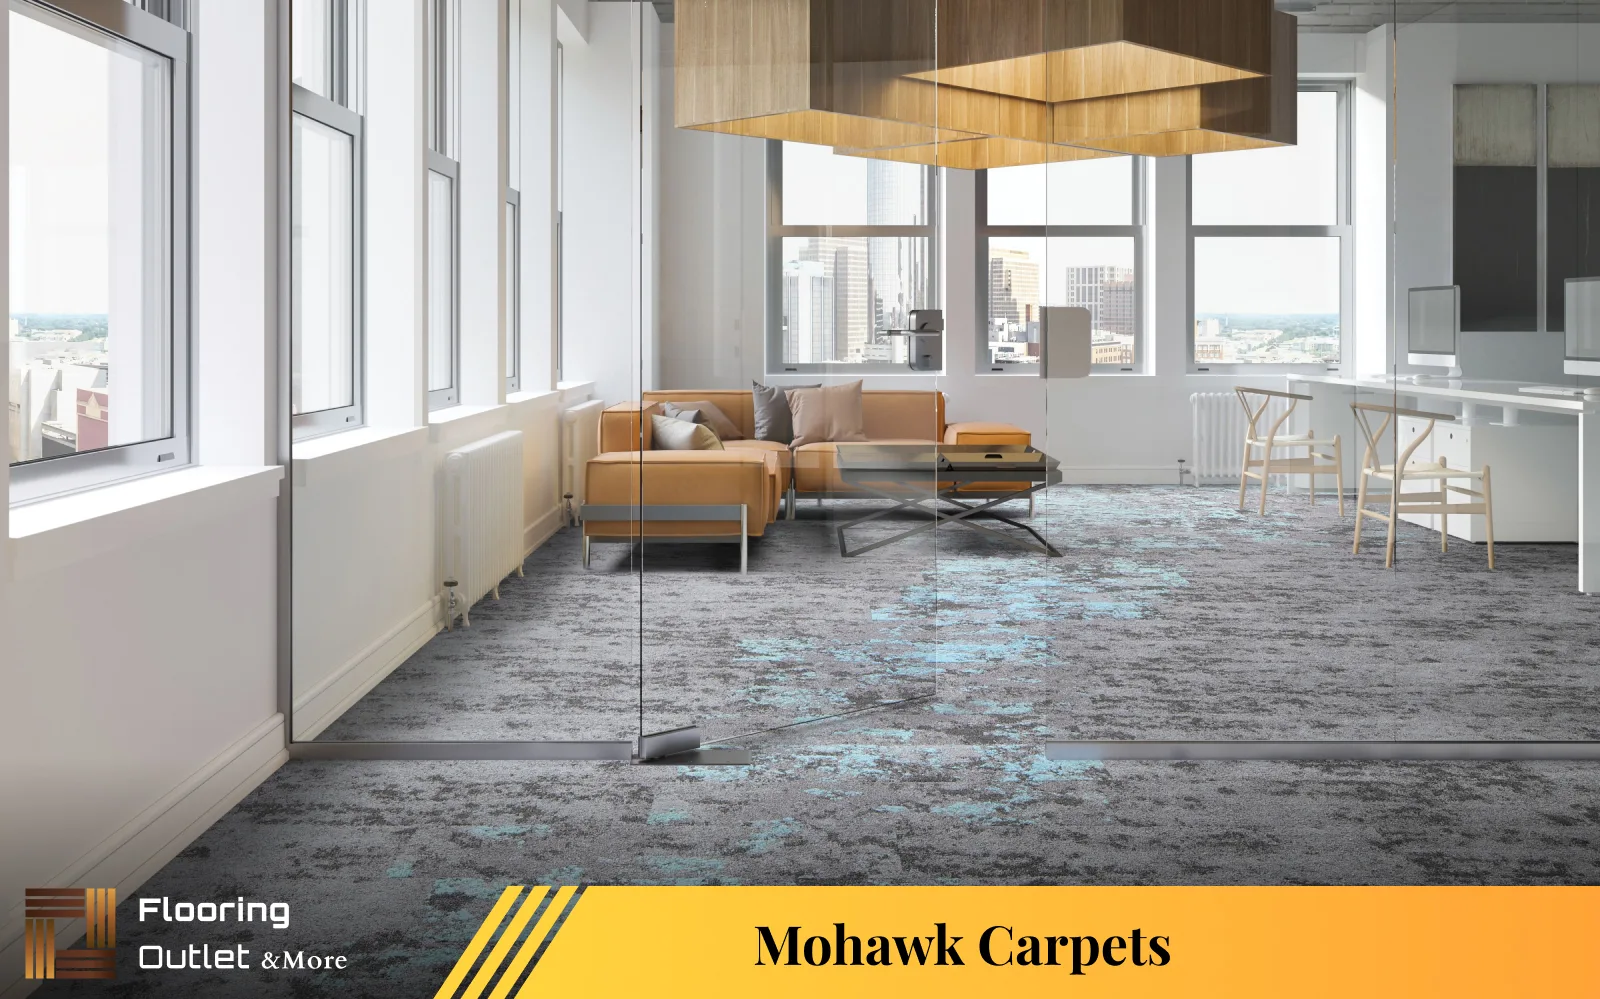 Mohawk carpets